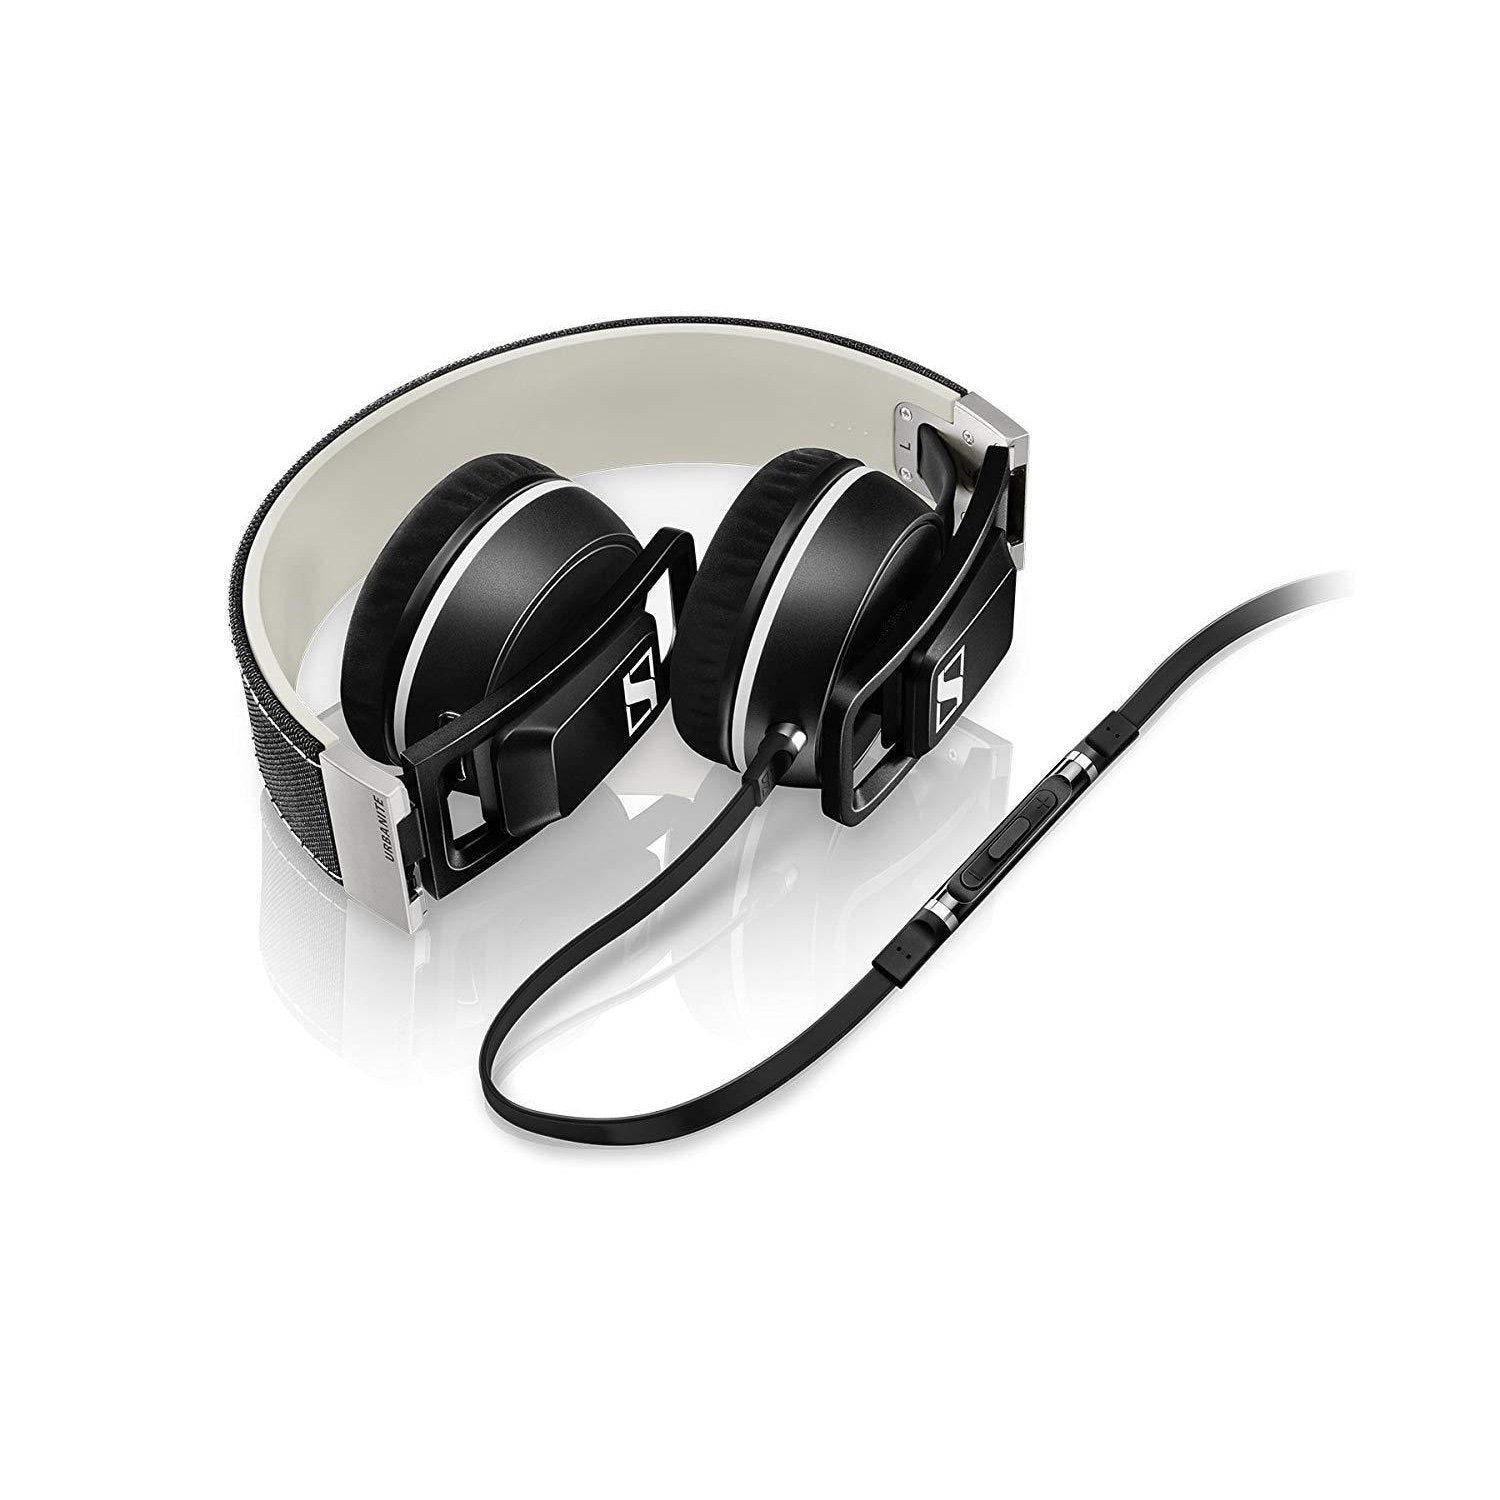 Sennheiser Urbanite On-Ear Headphones